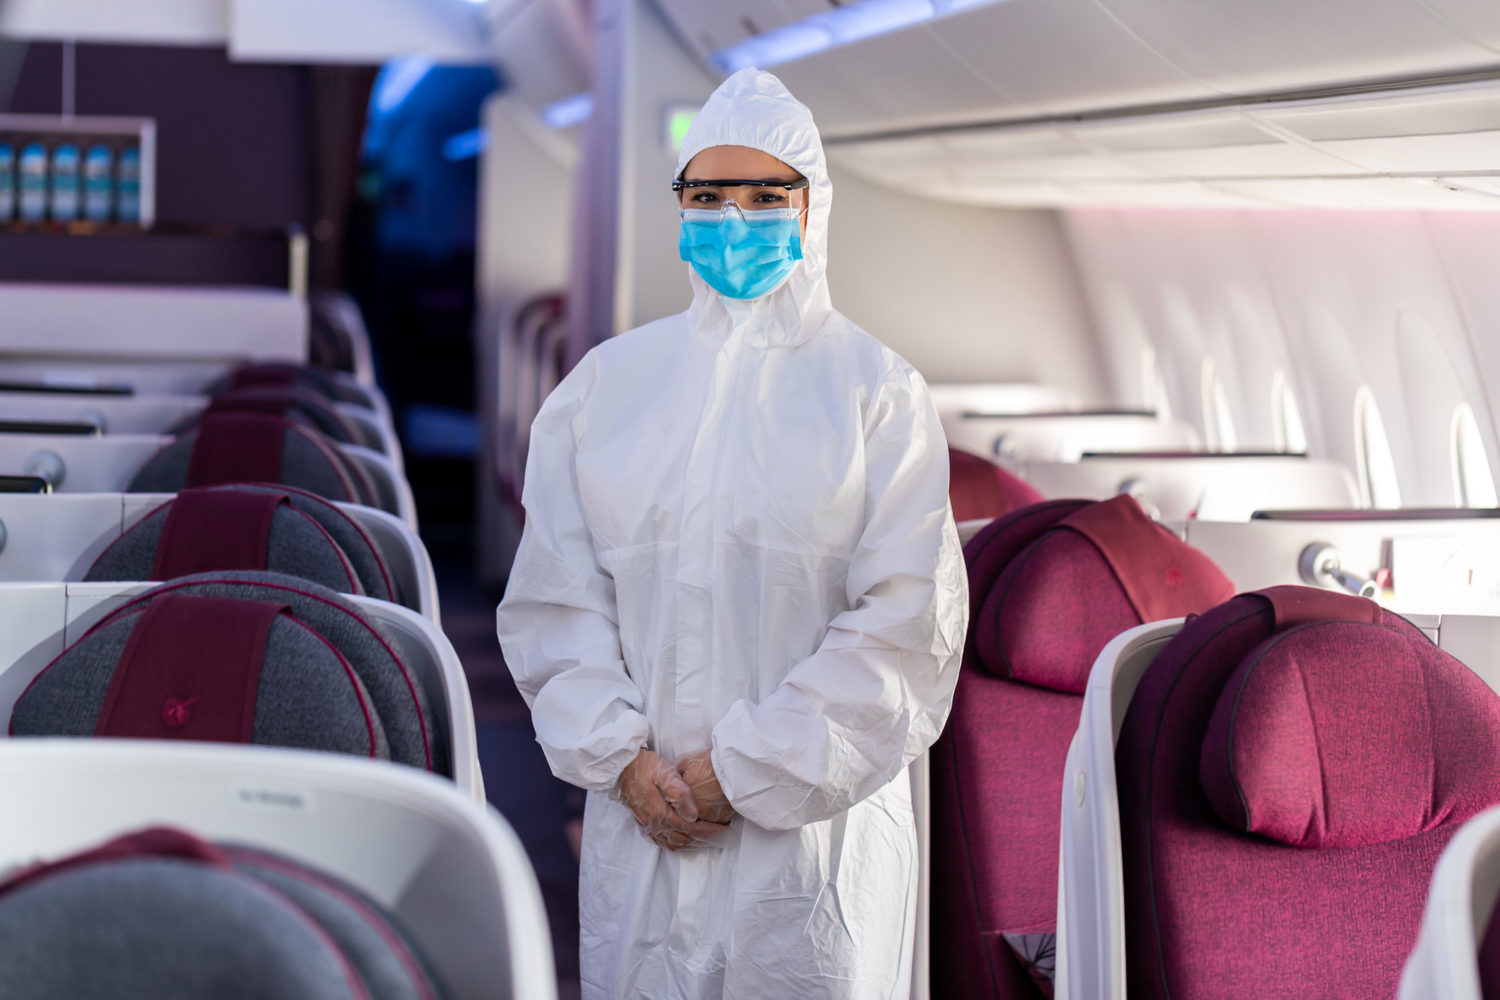 Qatar Airways flight crew body suit